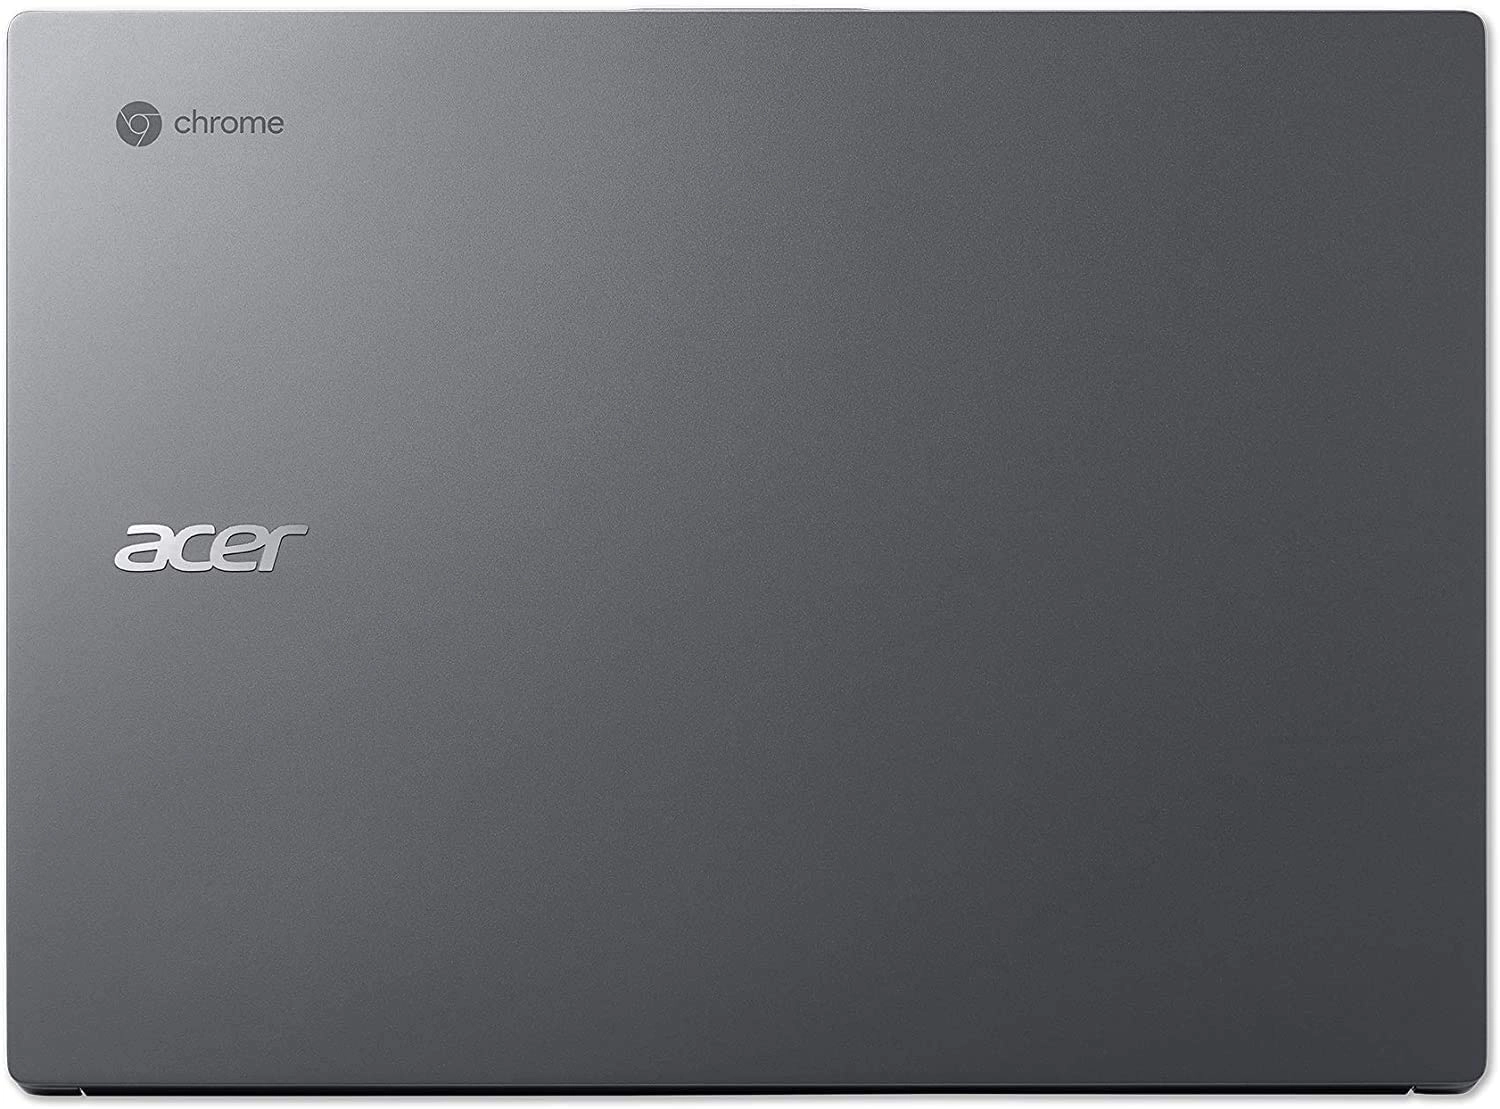 Acer Chromebook 714 laptop image